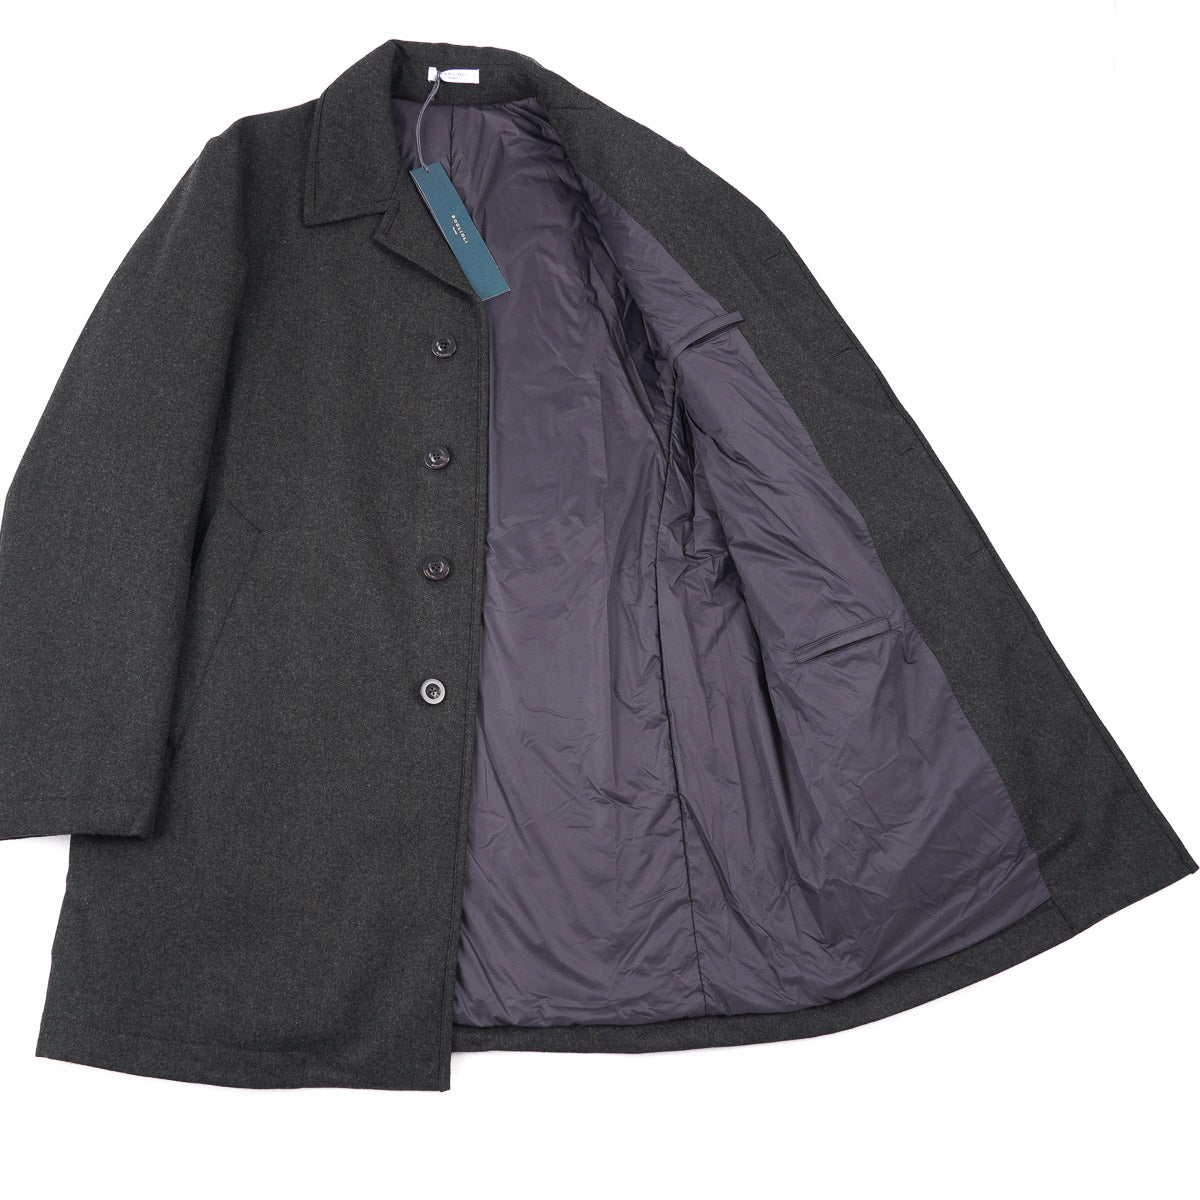 Boglioli Wool Overcoat with Insulated Lining - Top Shelf Apparel